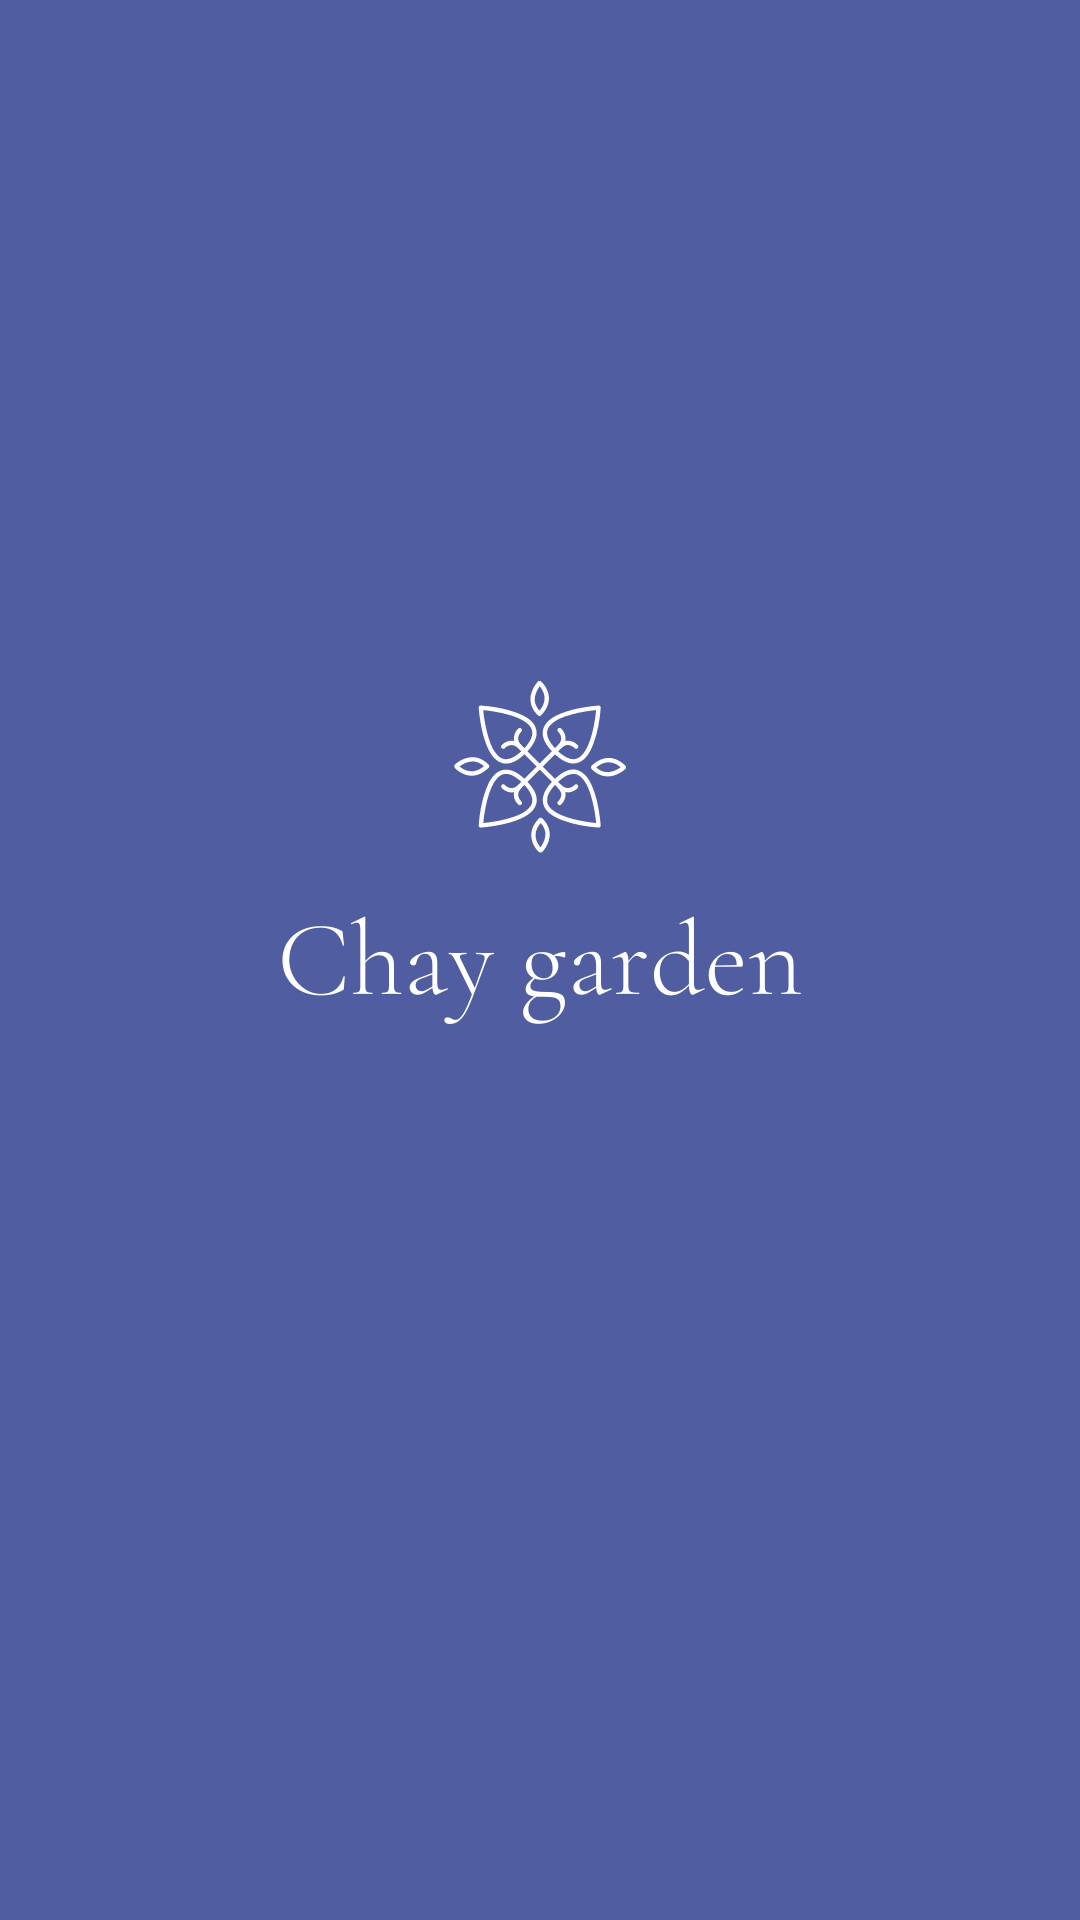 Chay garden